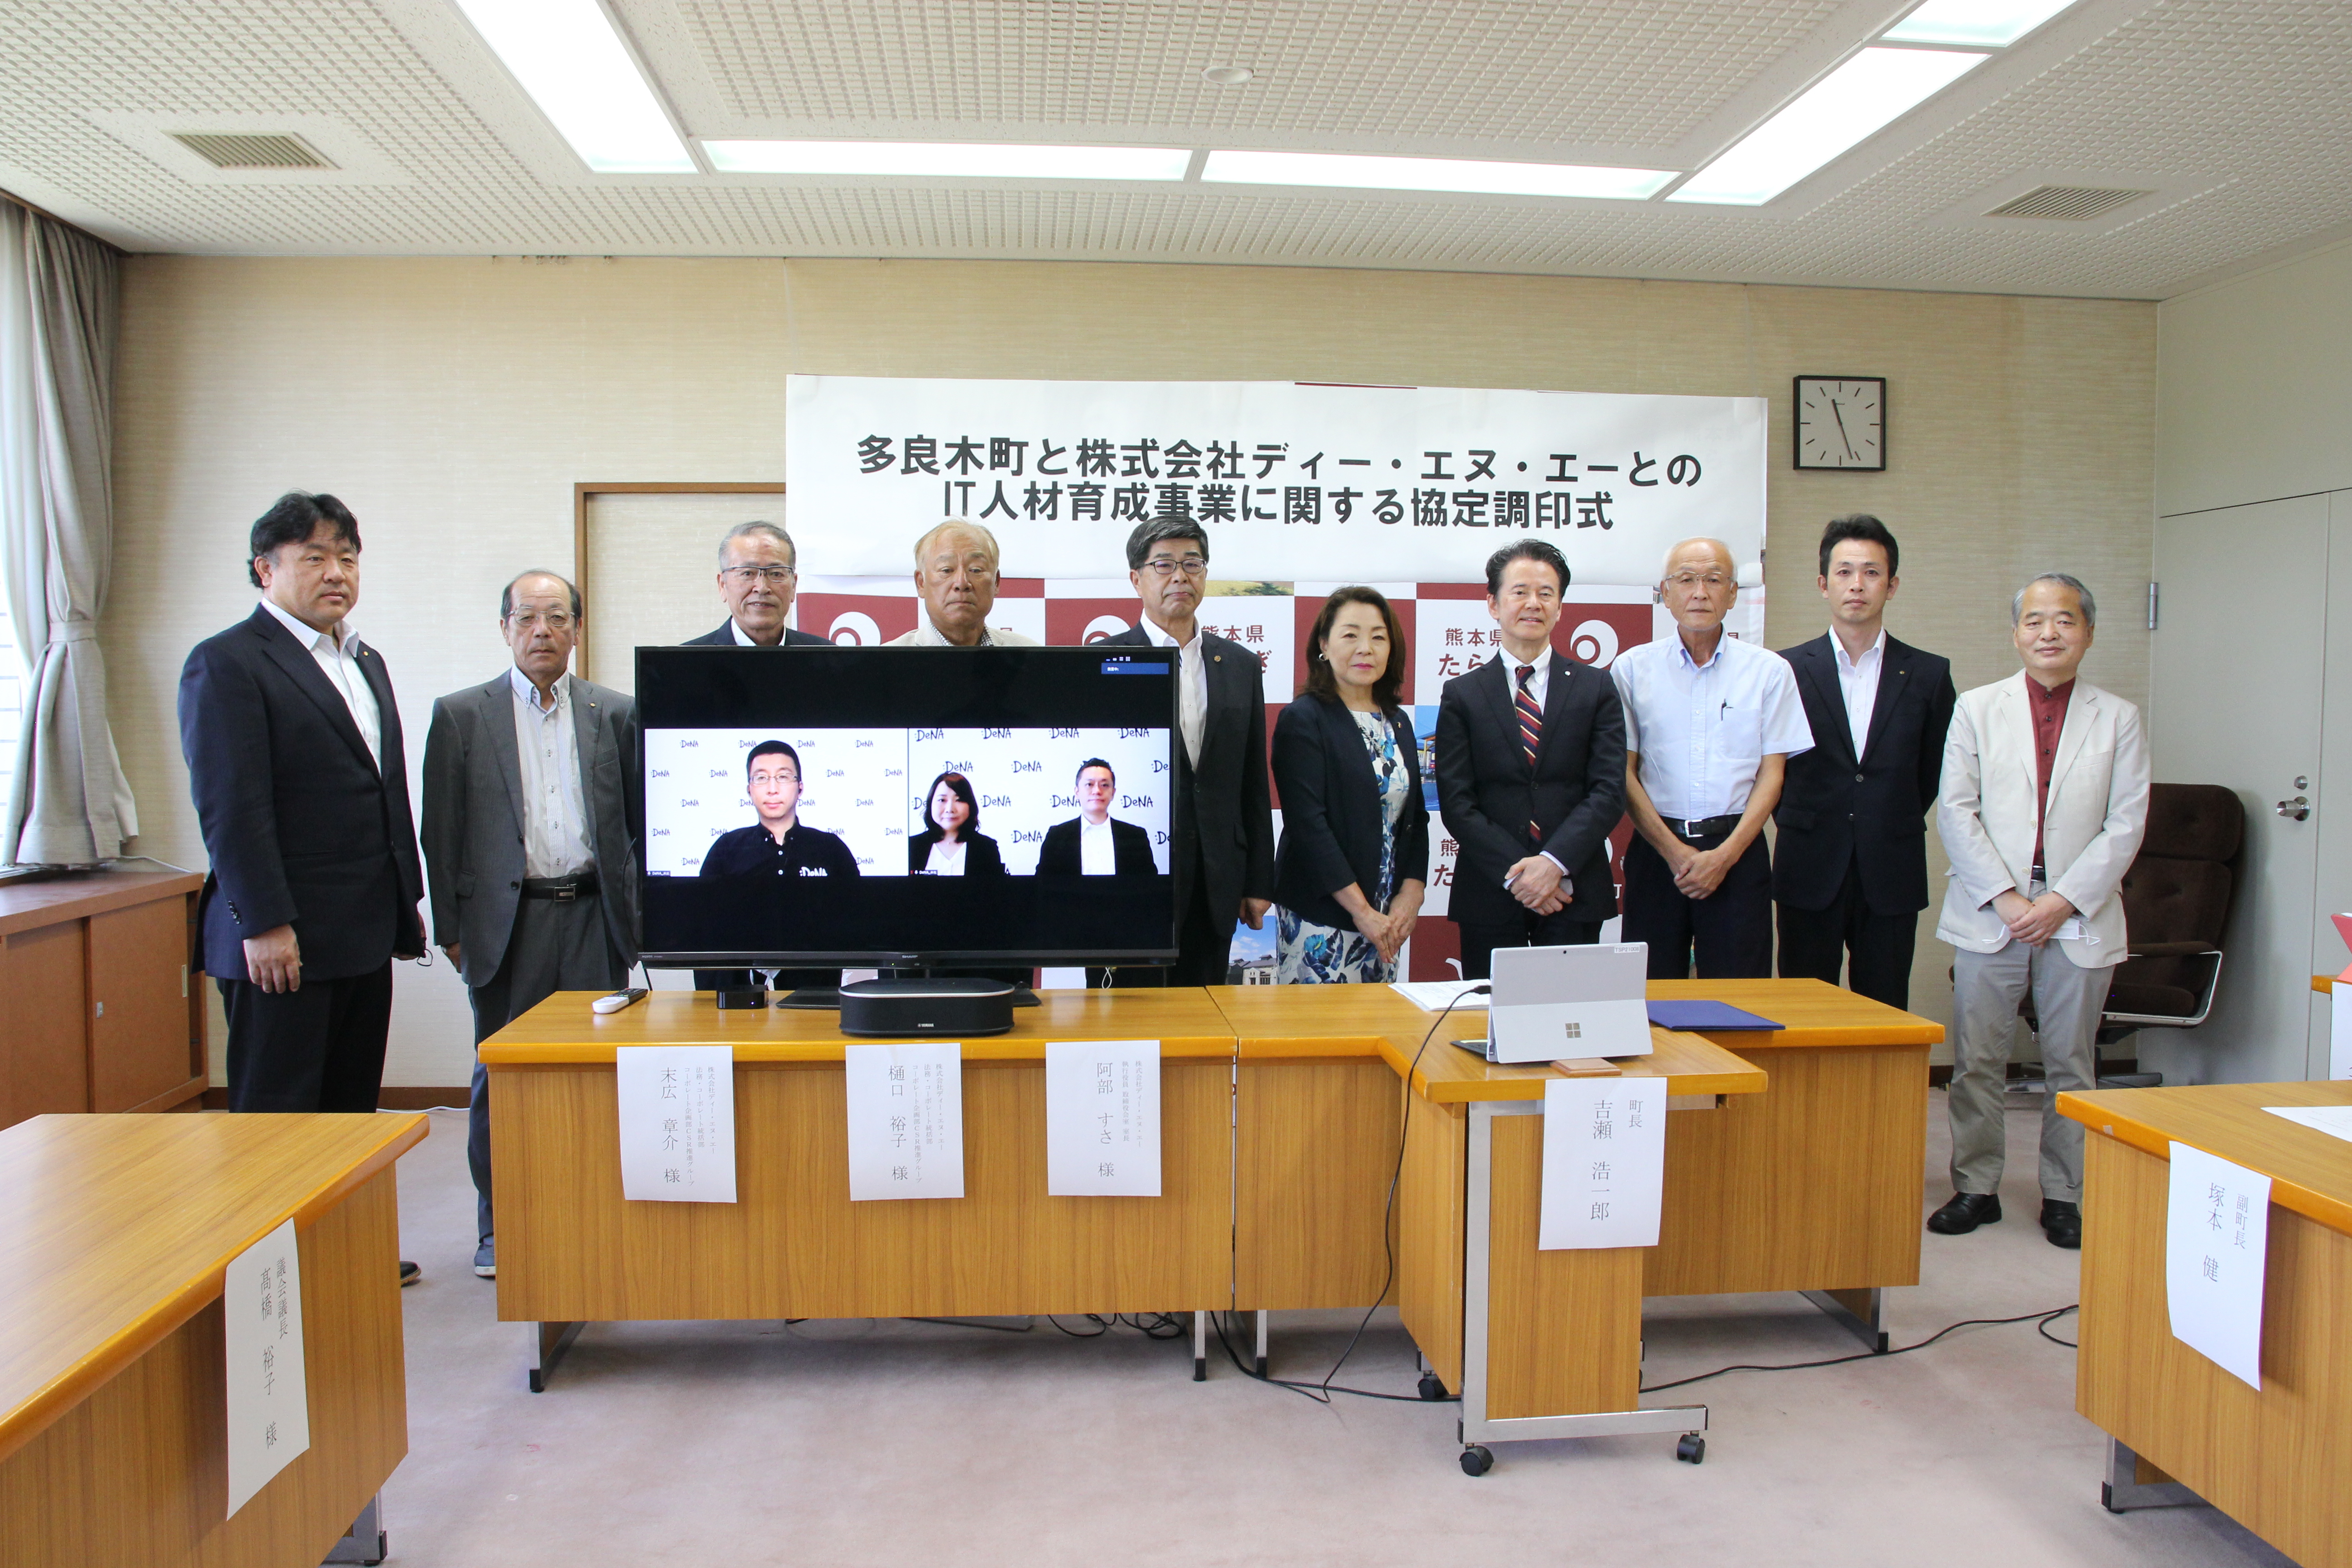 Agreement with Taraki Town, Kumamoto Prefecture, on IT Human Resource Development Project